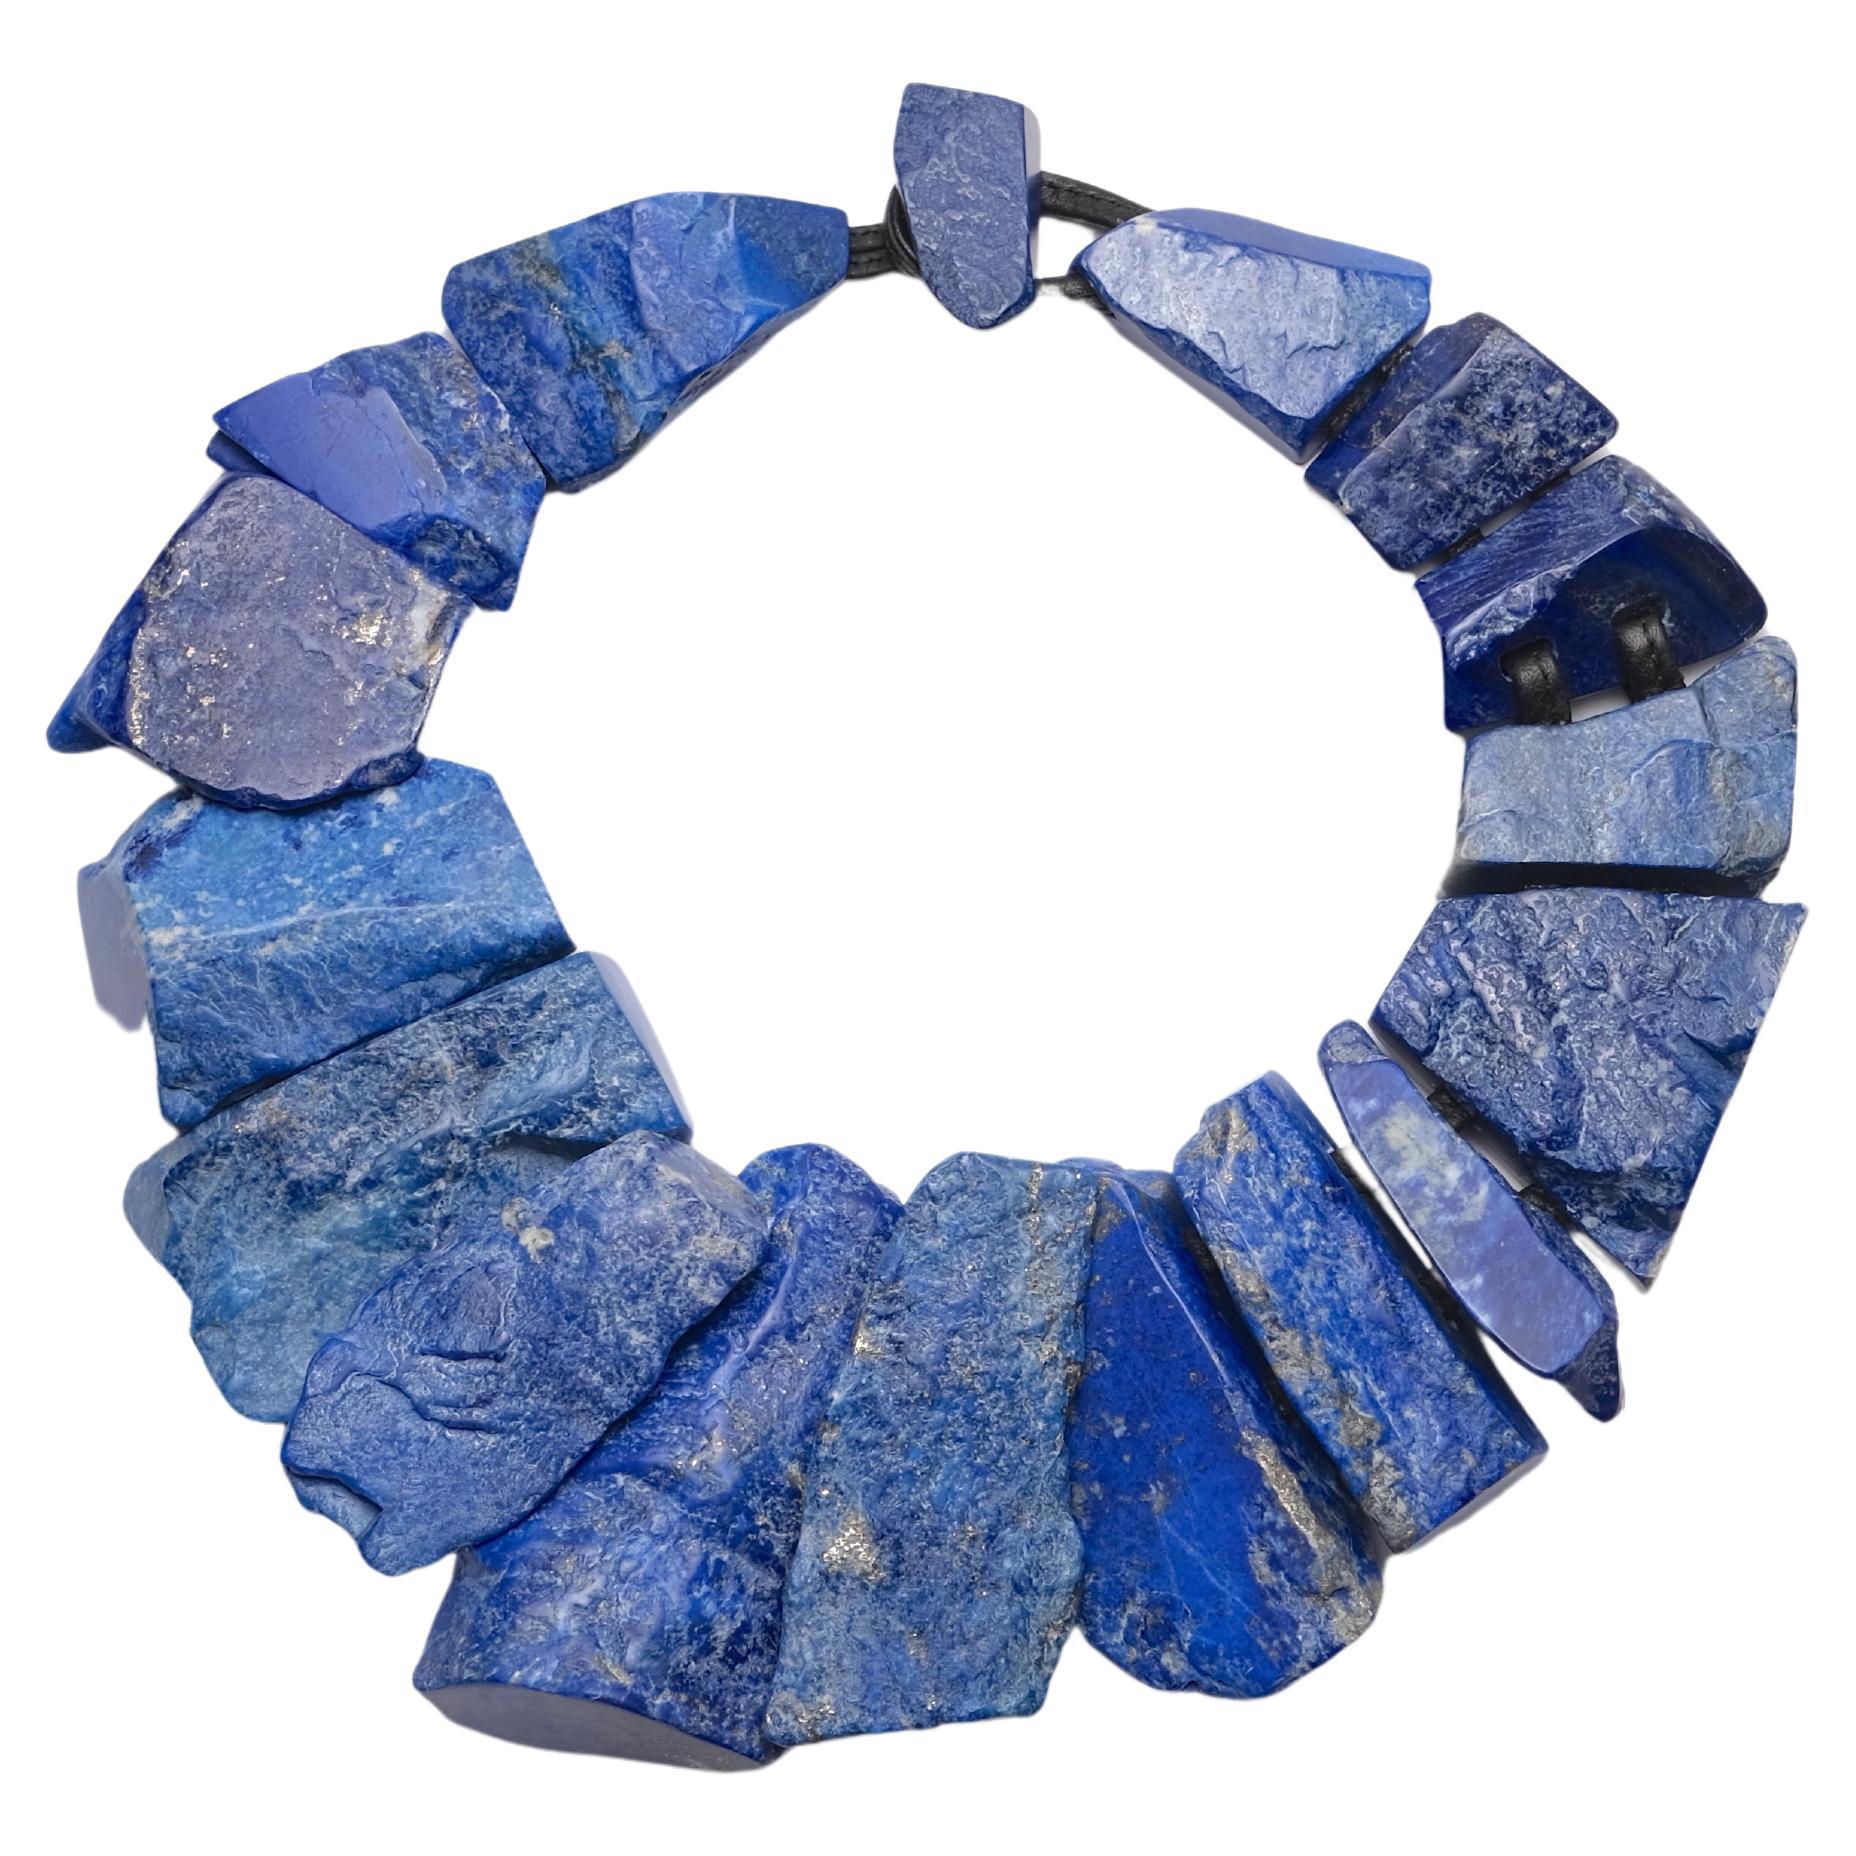 Collier unique en son genre en lapis-lazuli de la marque danoise Monies en vente